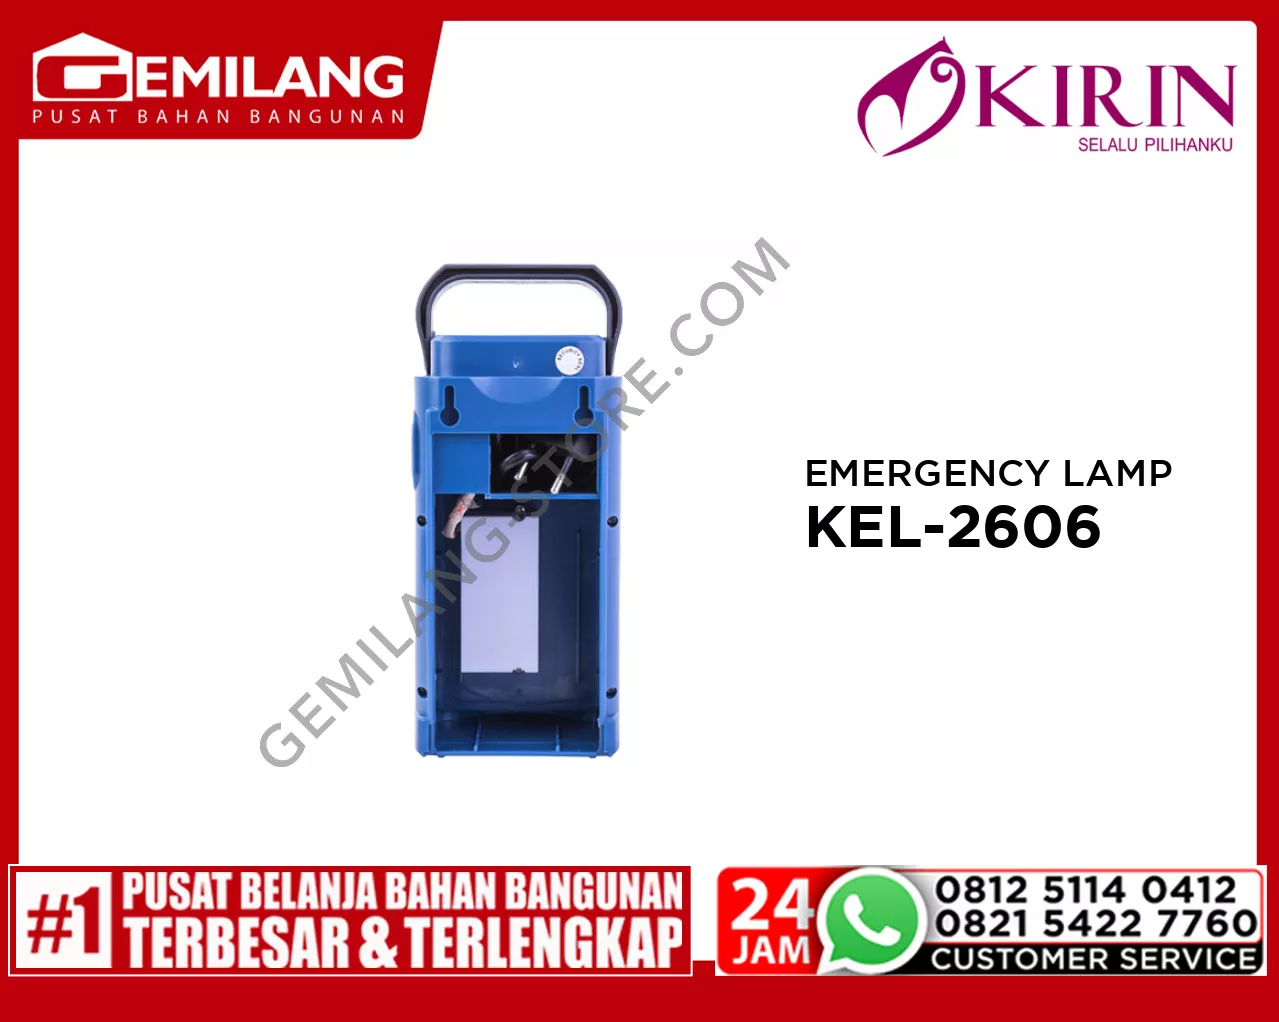 KIRIN EMERGENCY LAMP 44 LED KEL-2606